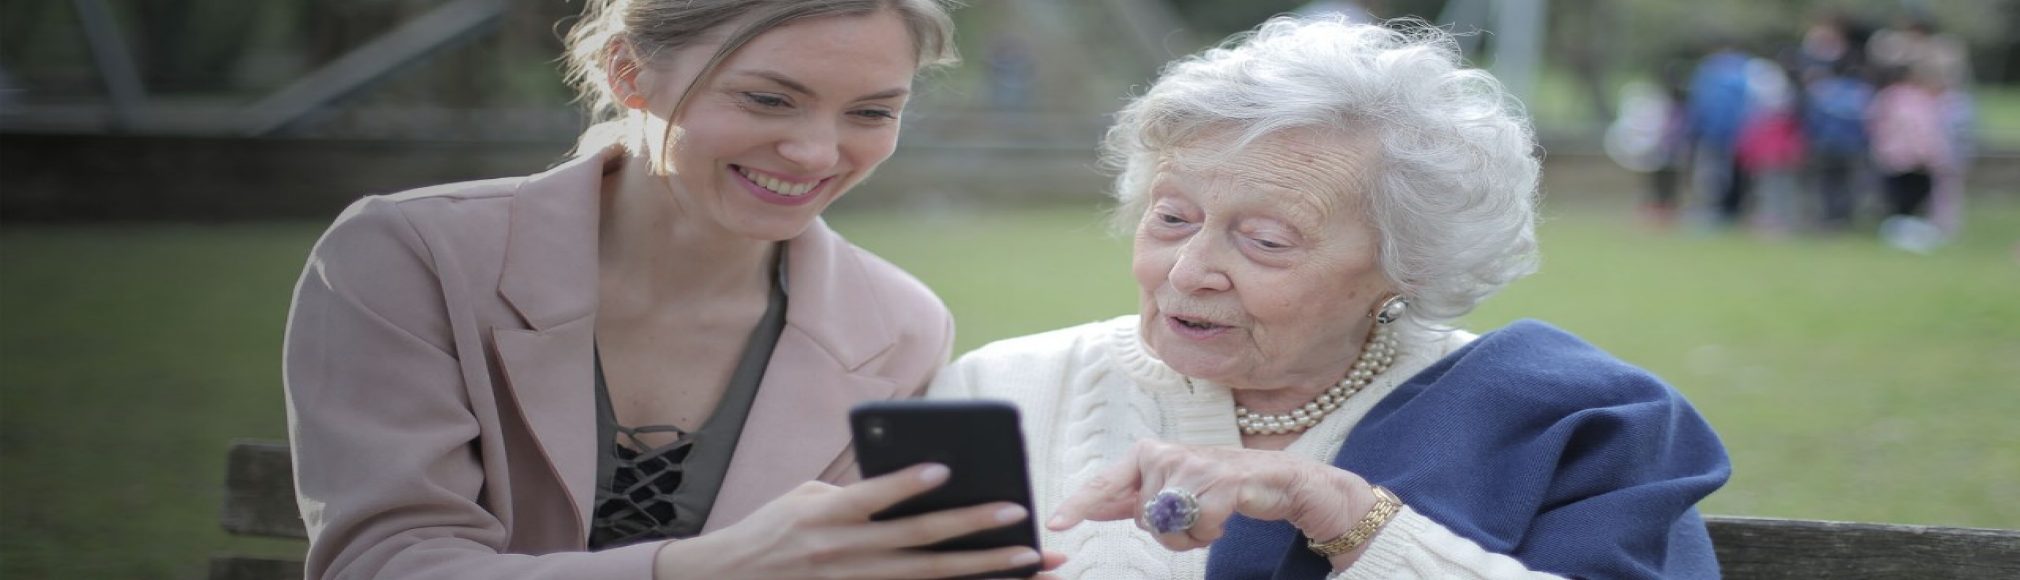 blog-hero-best-phones-for-older-people-2020x808